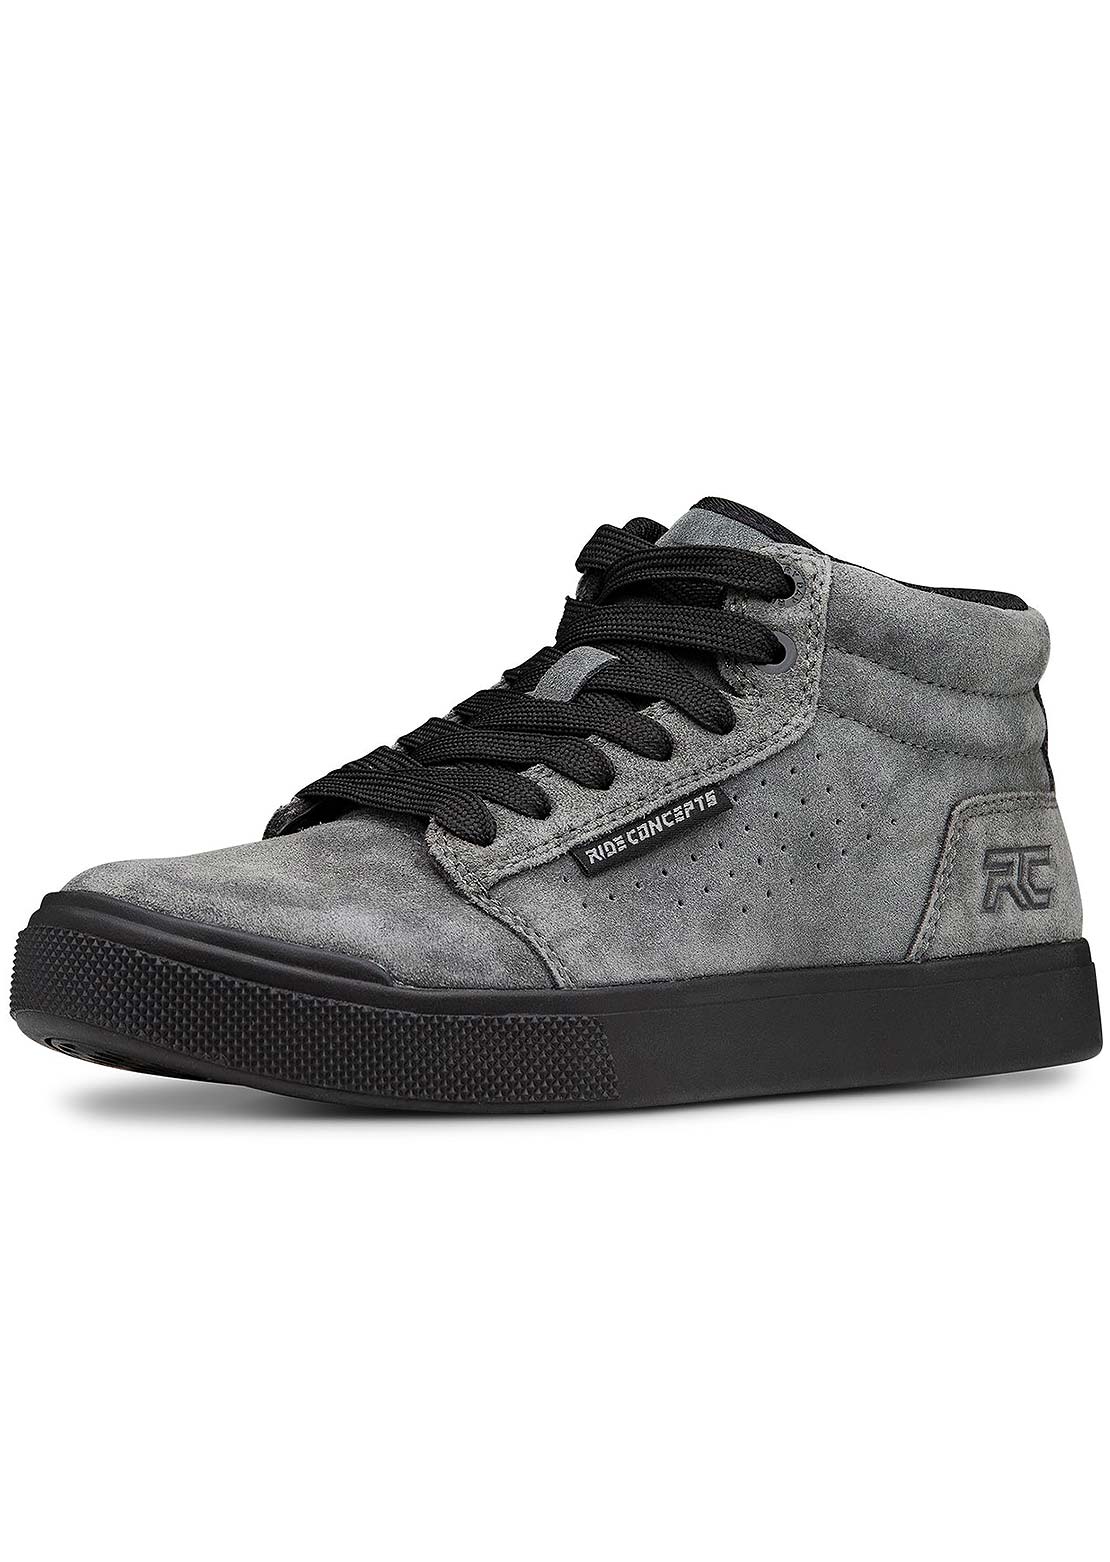 Ride Concepts Junior Vice Mid Flat Shoes Charcoal/Black